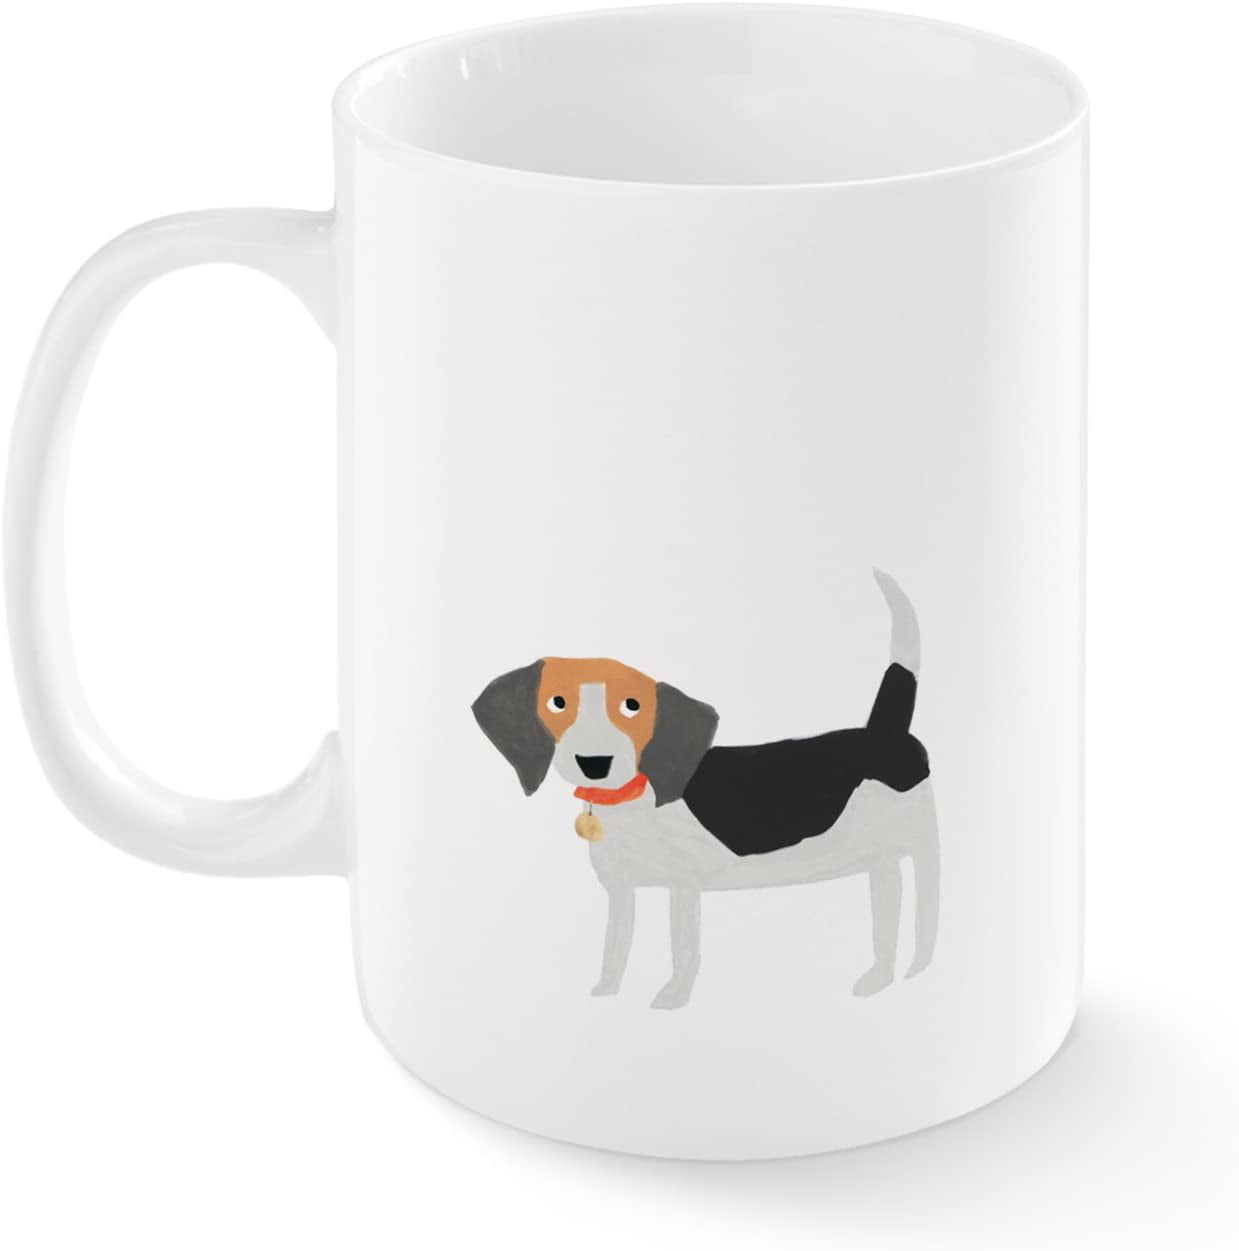 Gift Mug Dog Lover Face Owner Pet Cute Animal Details about   Beagle